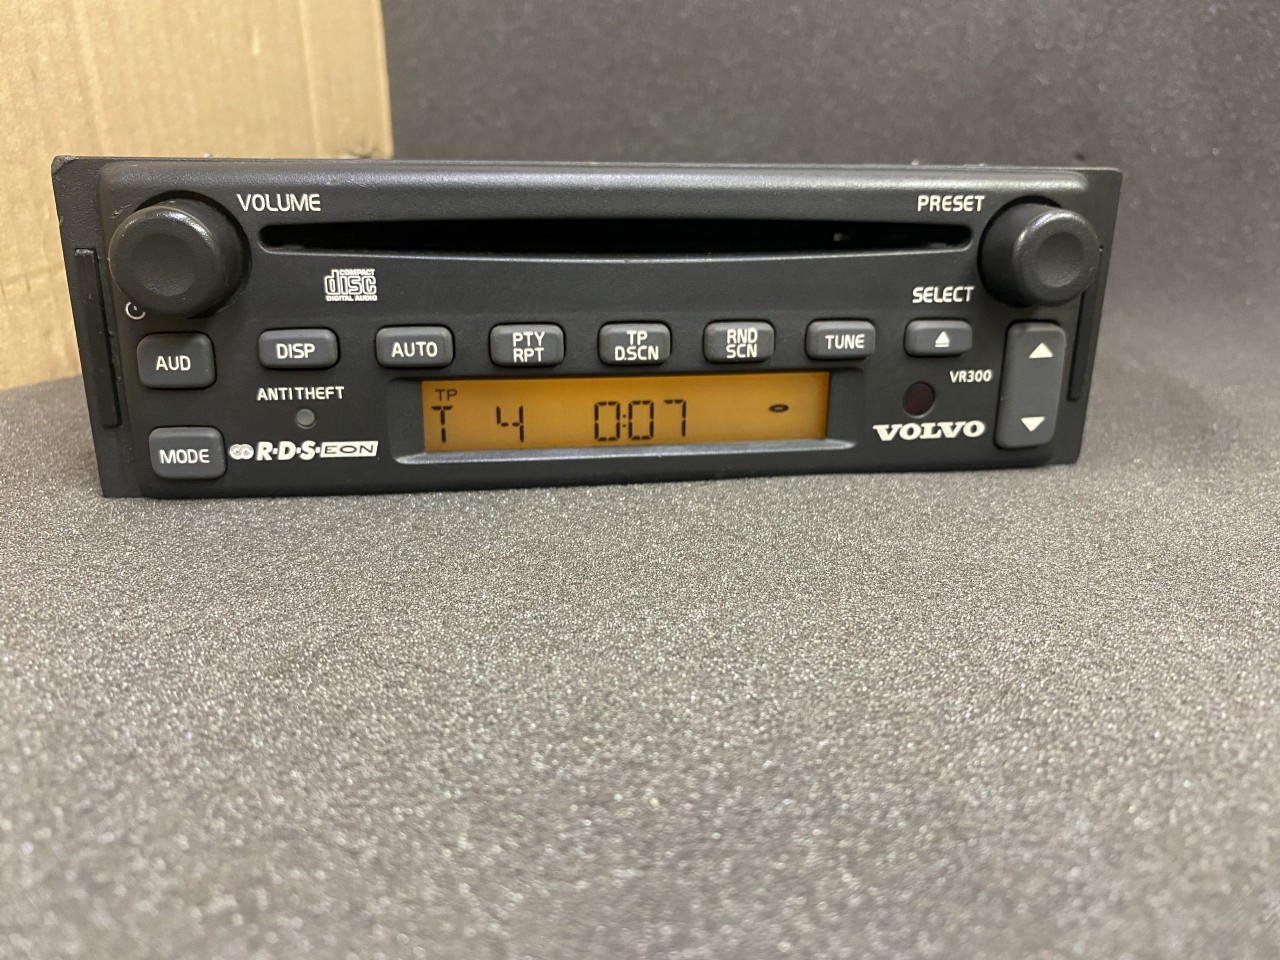 Volvo VR300 radio code